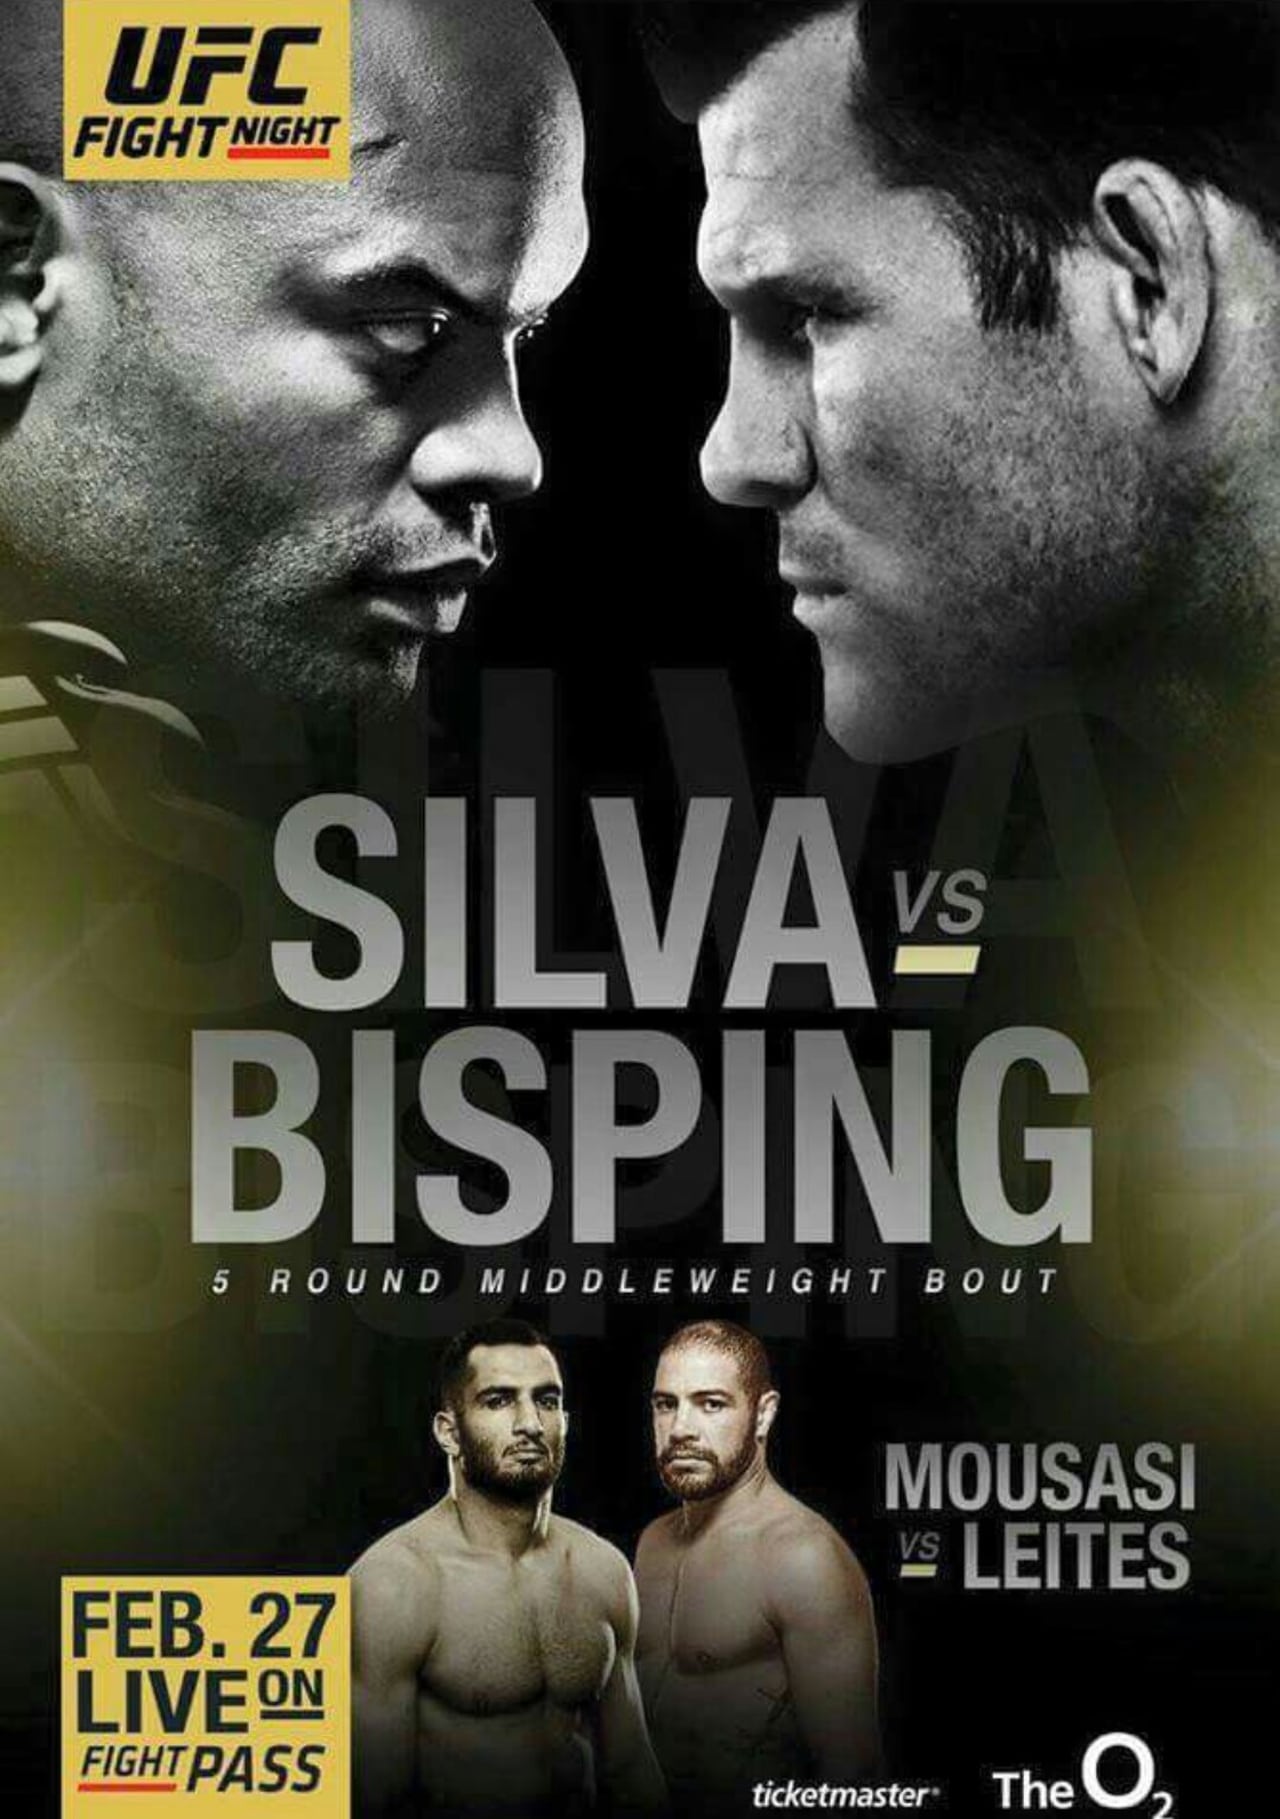 UFC Fight Night 84: Silva vs. Bisping